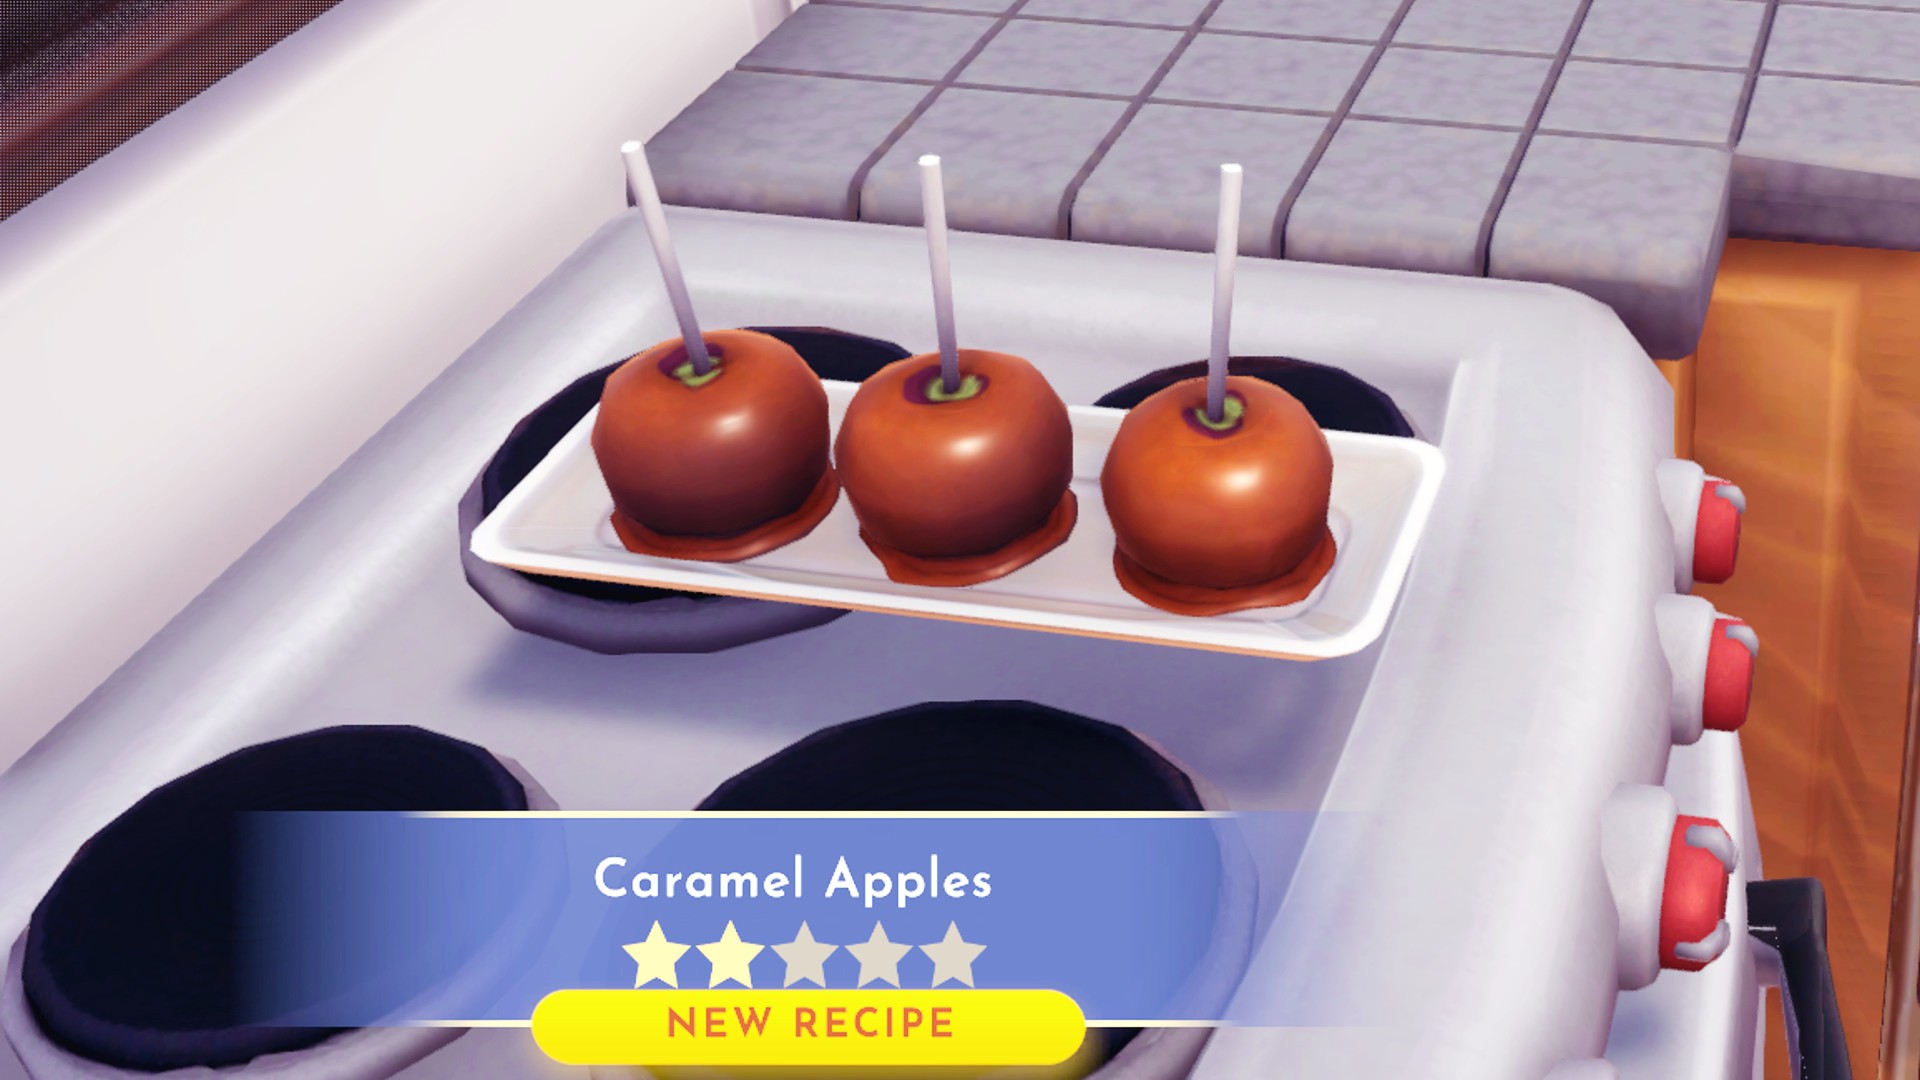 Disney Dreamlight Valley Desserts: Tiga apel karamel duduk di atas piring, menunjukkan resep dua bintang